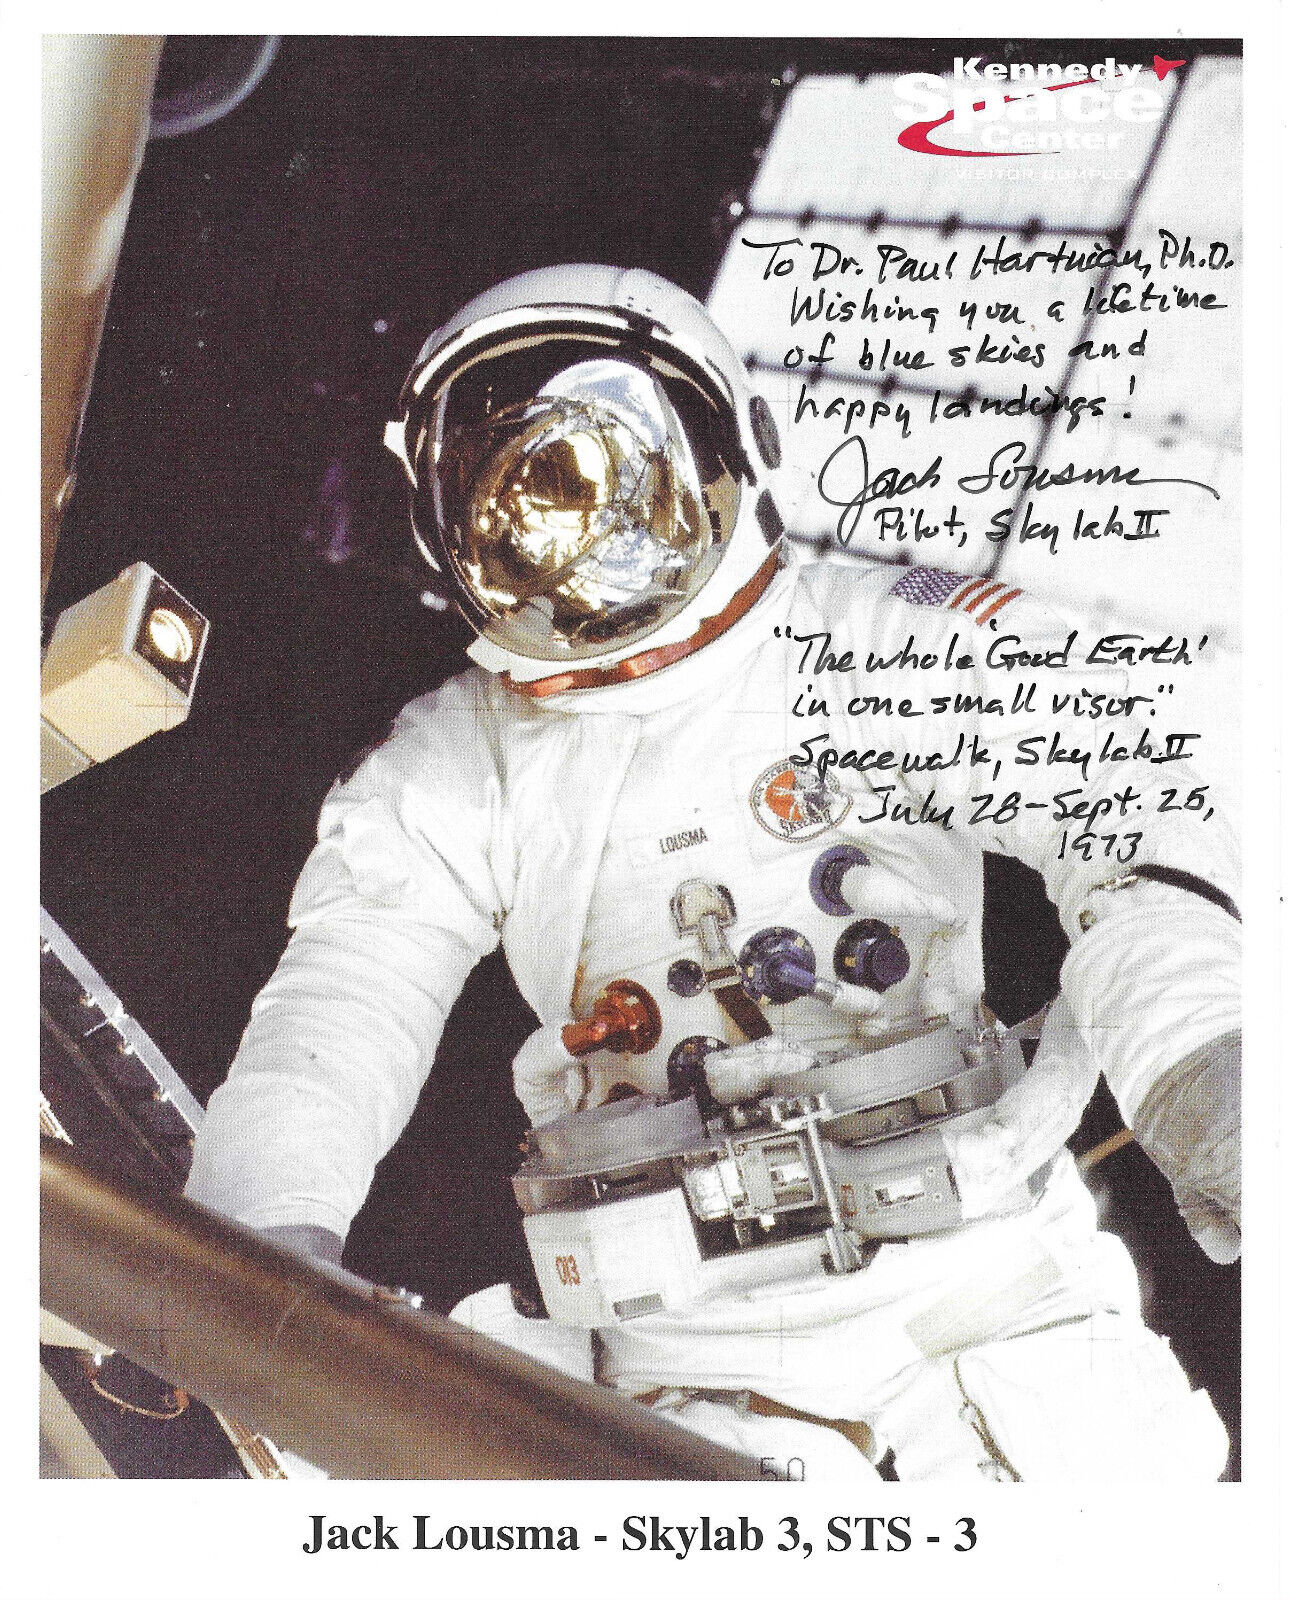 Signed and inscribed NASA litho of astronaut Jack Lousma